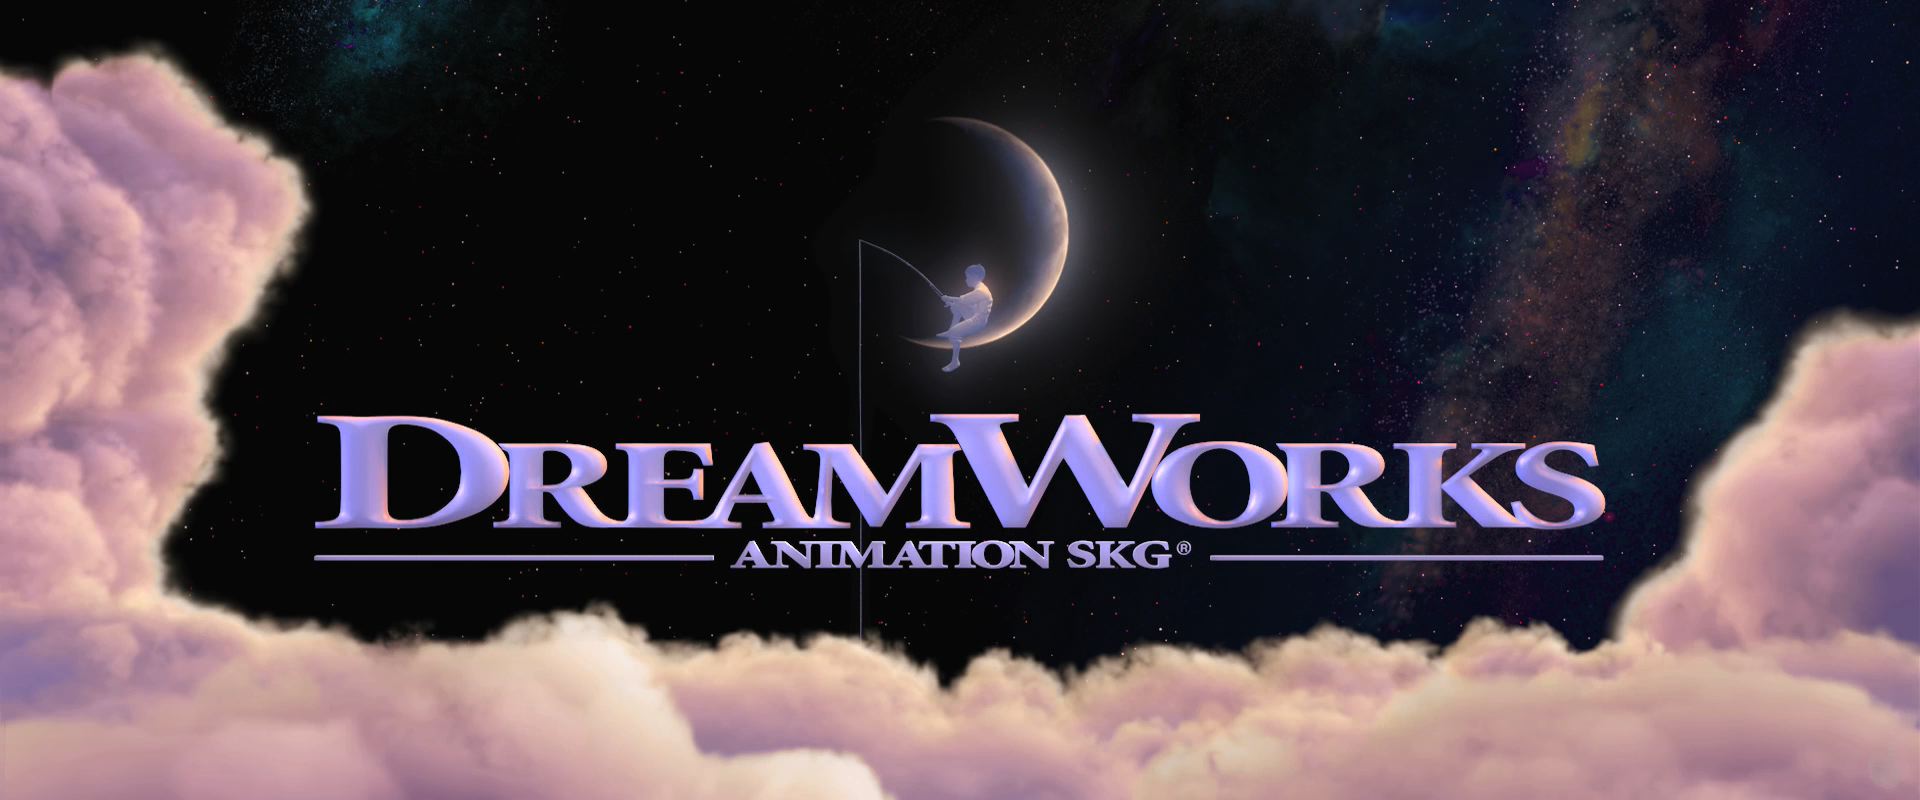 Dreamworks-Studio-Space-Clouds-Logo-Wallpaper